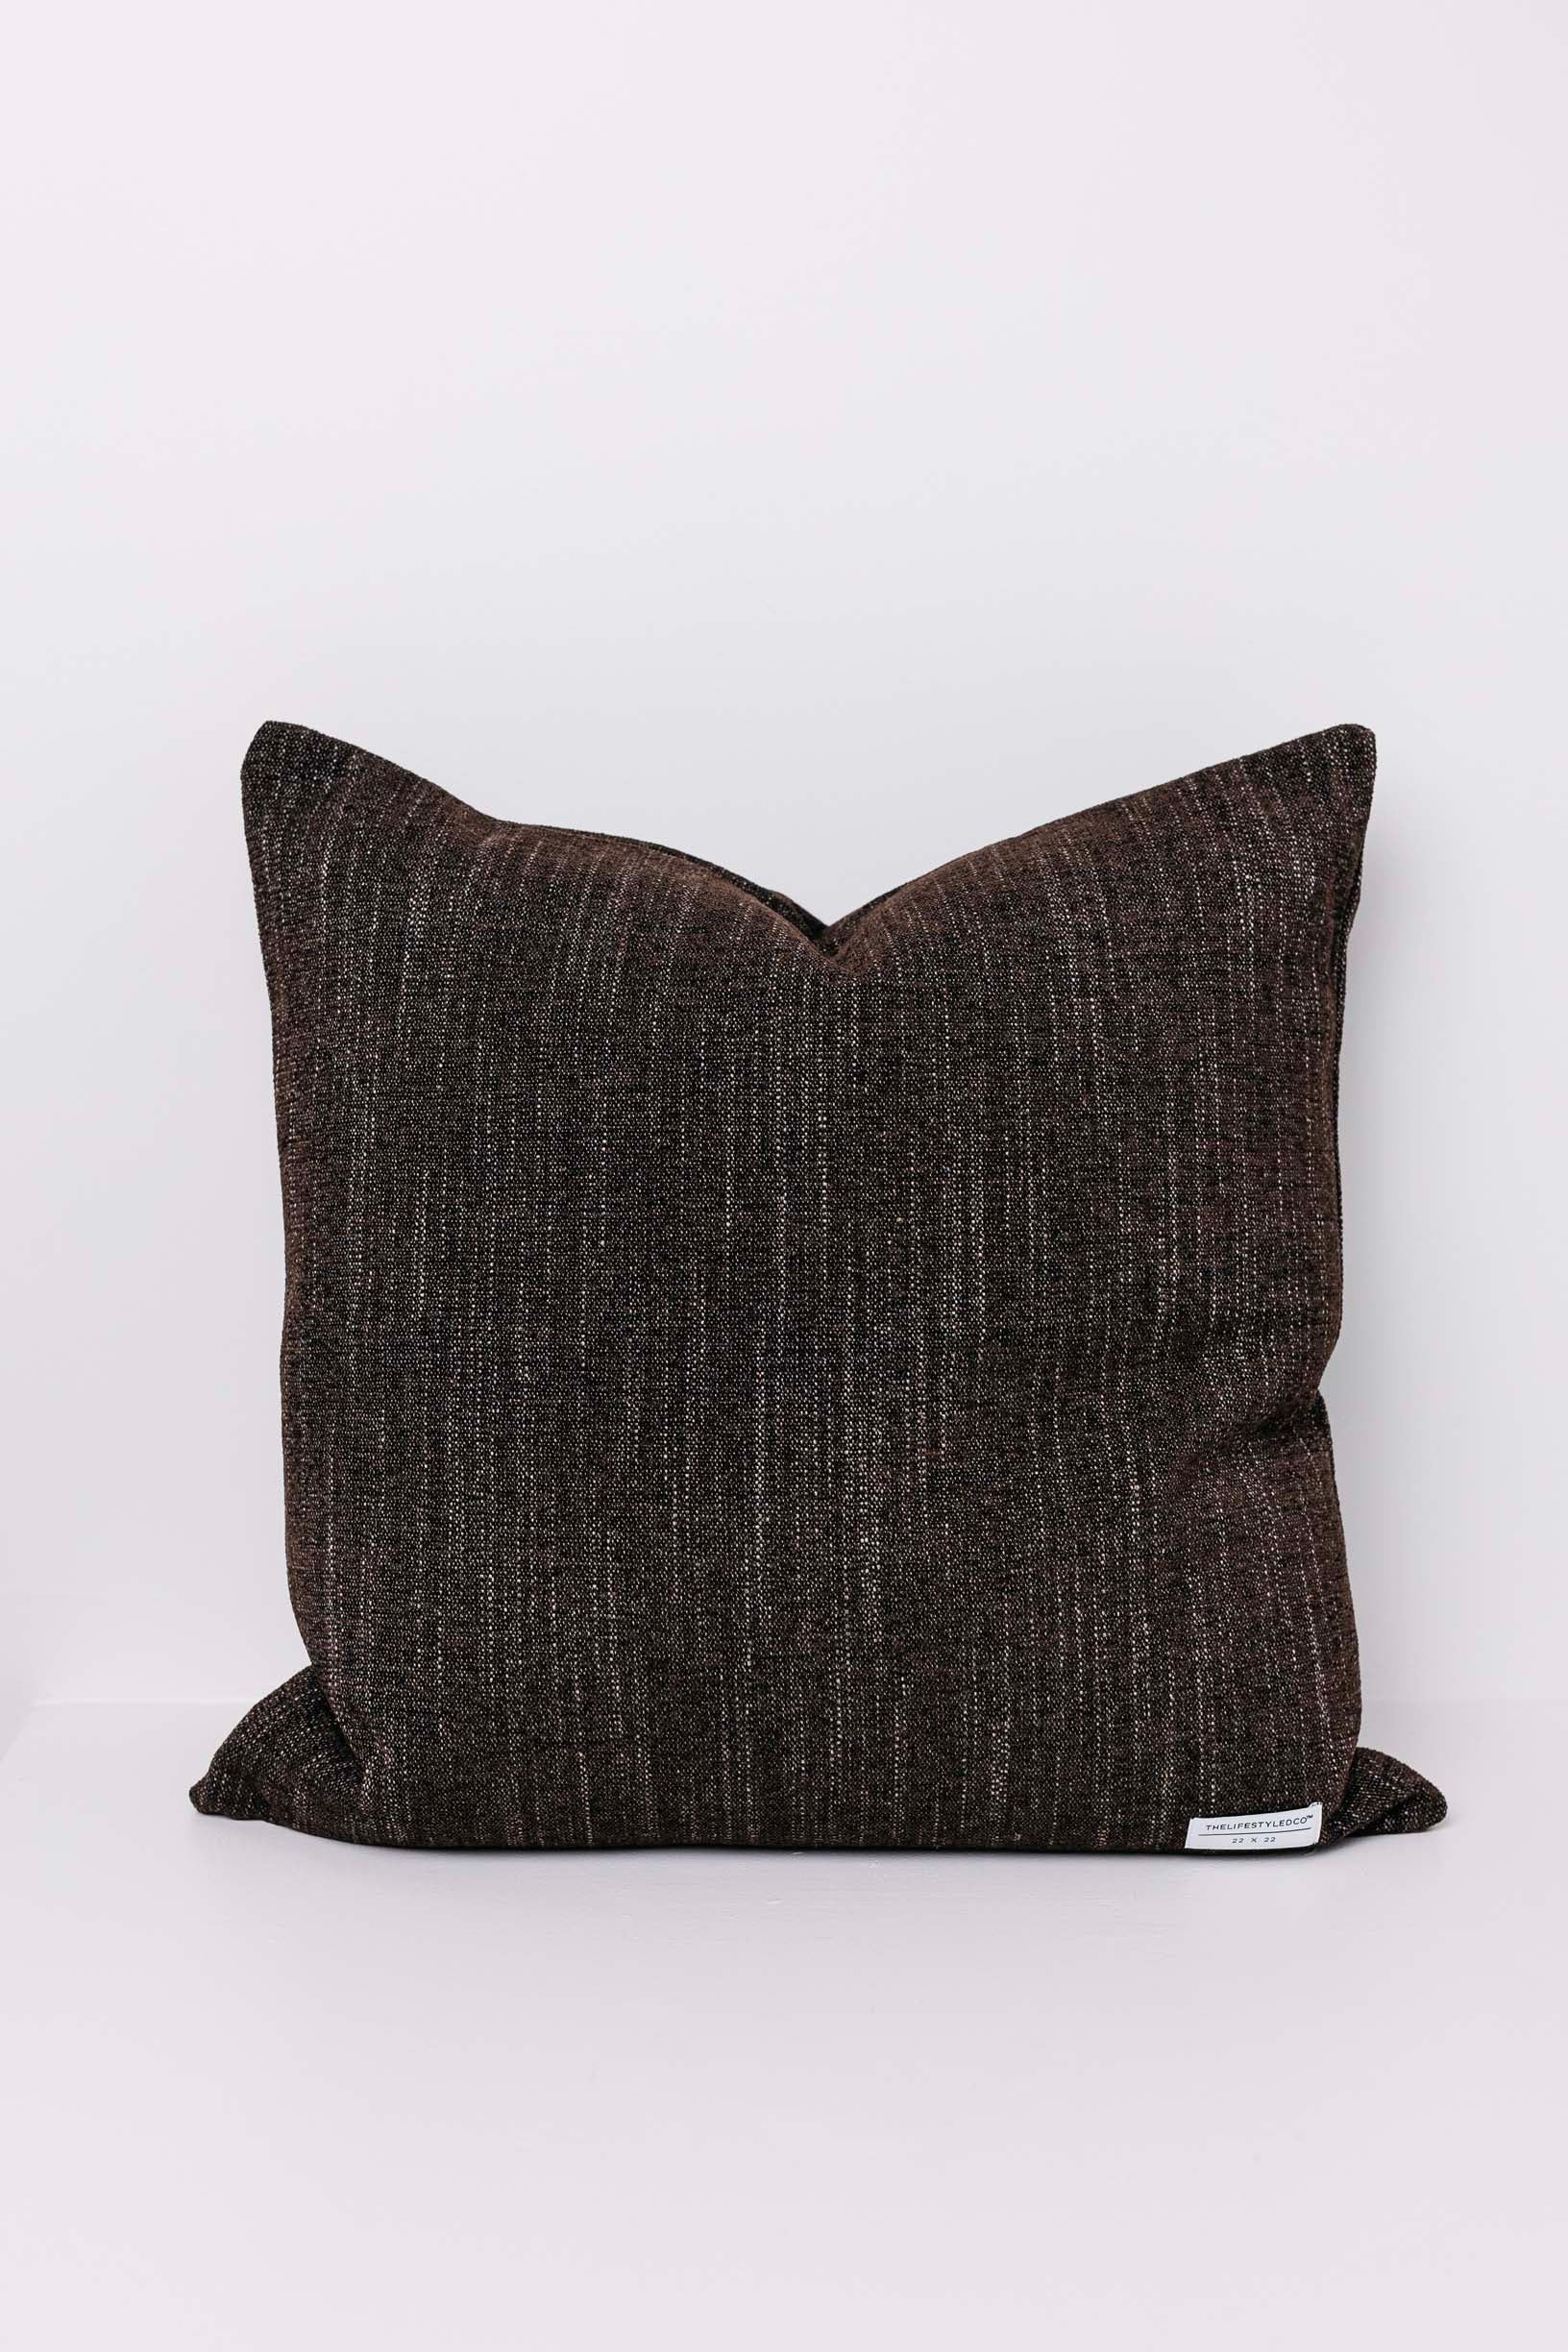 Morris Slub Chenille Pillow - Chocolate- 2 Sizes